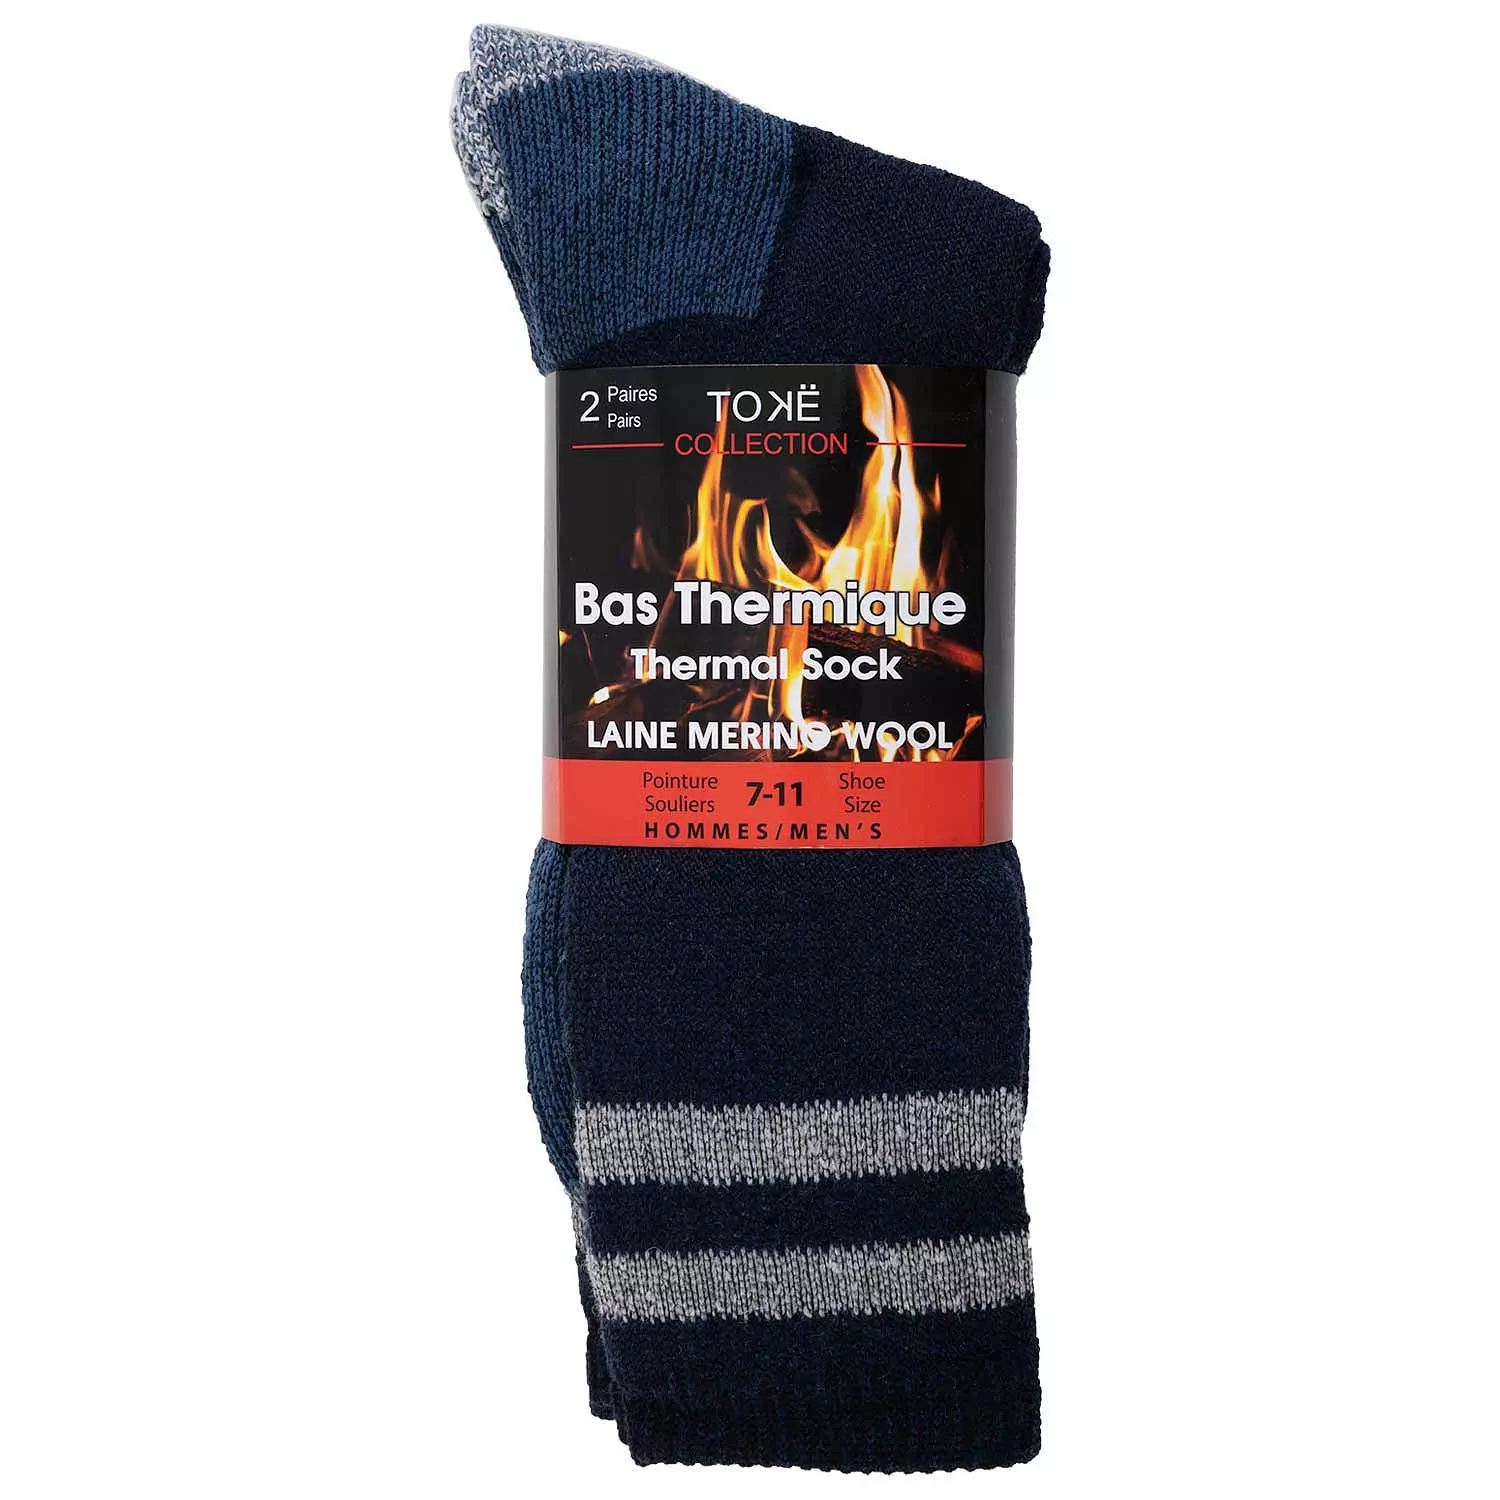 Men's merino wool thermal socks, navy, 2 pairs